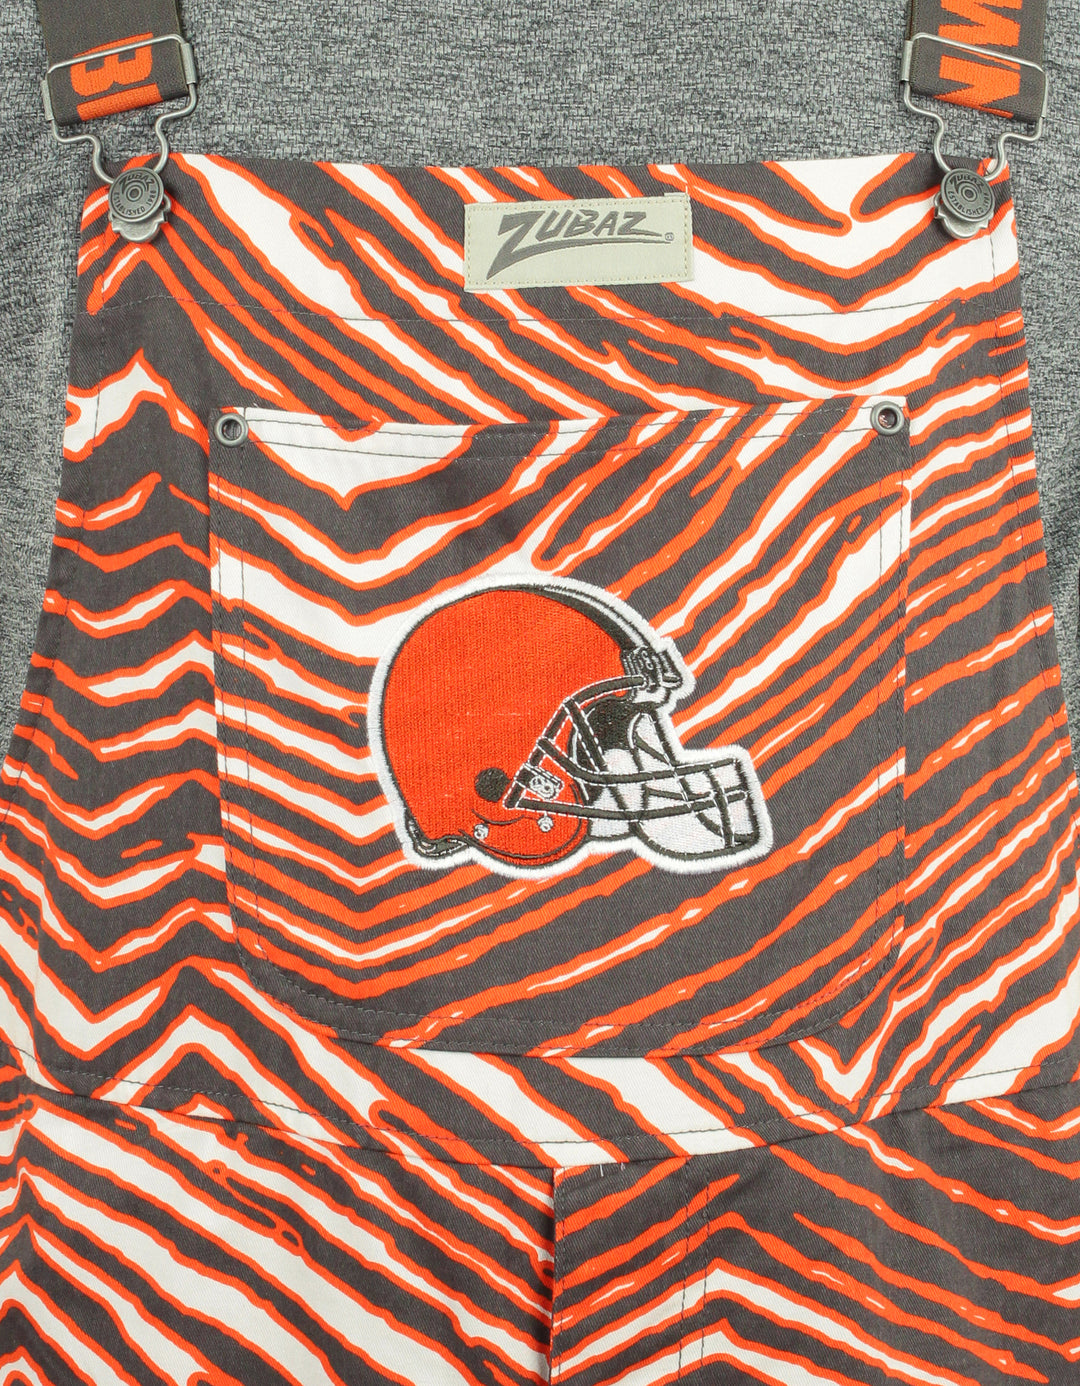 Zubaz NFL Men's Cleveland Browns Zebra Printed Team Bib Overalls